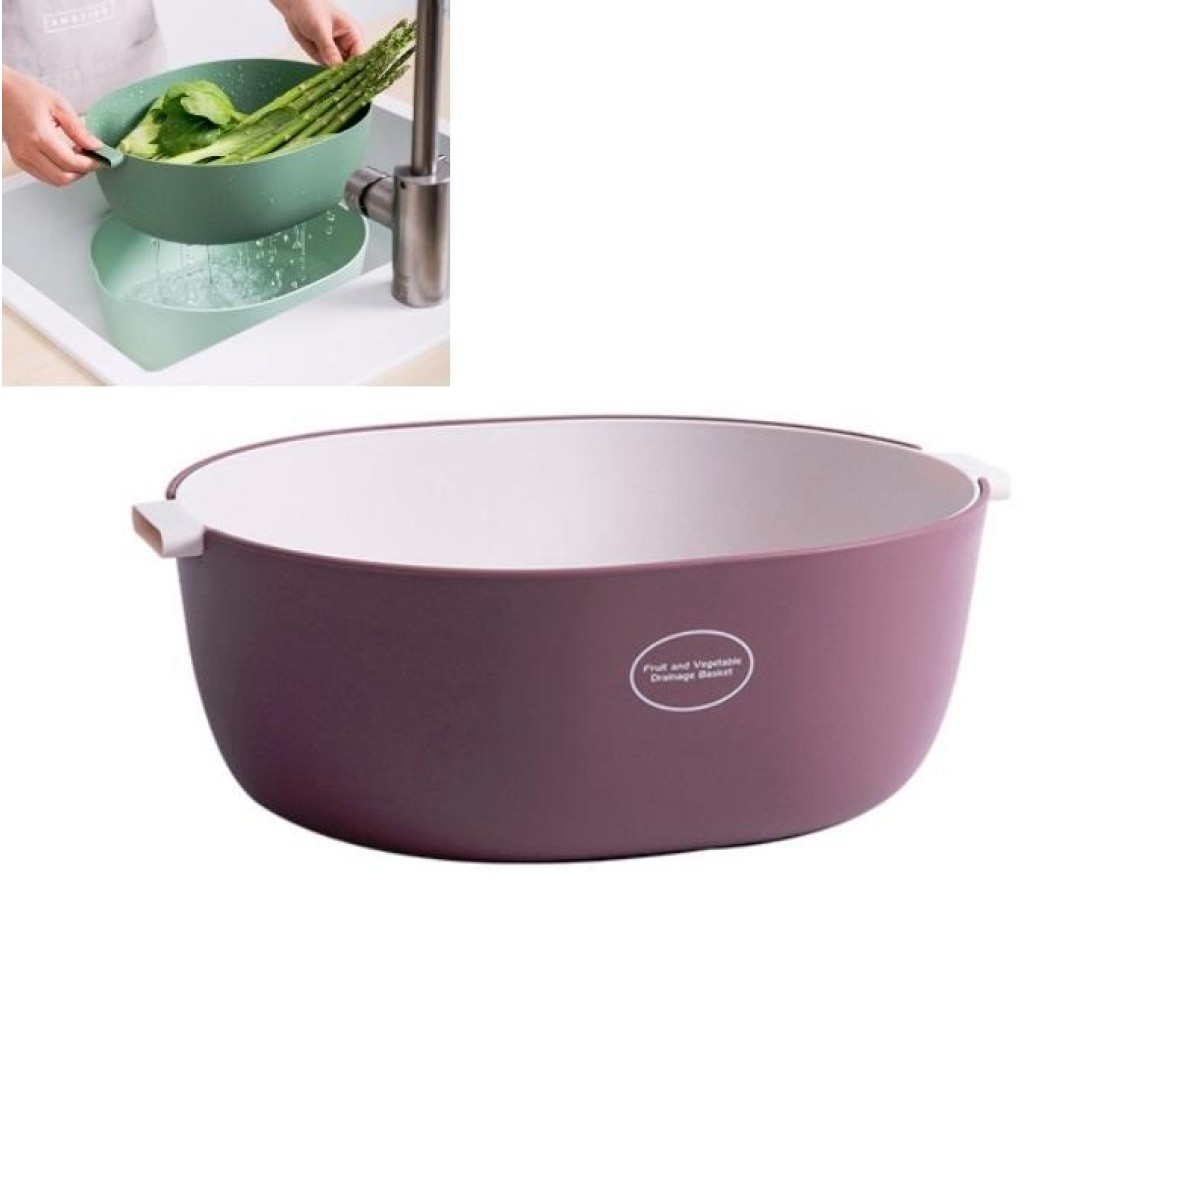 Kitchen Rice Pan Double-dish Vegetable Drain Basket Plastic Fruit Basket, Color:U Shape Dark Red